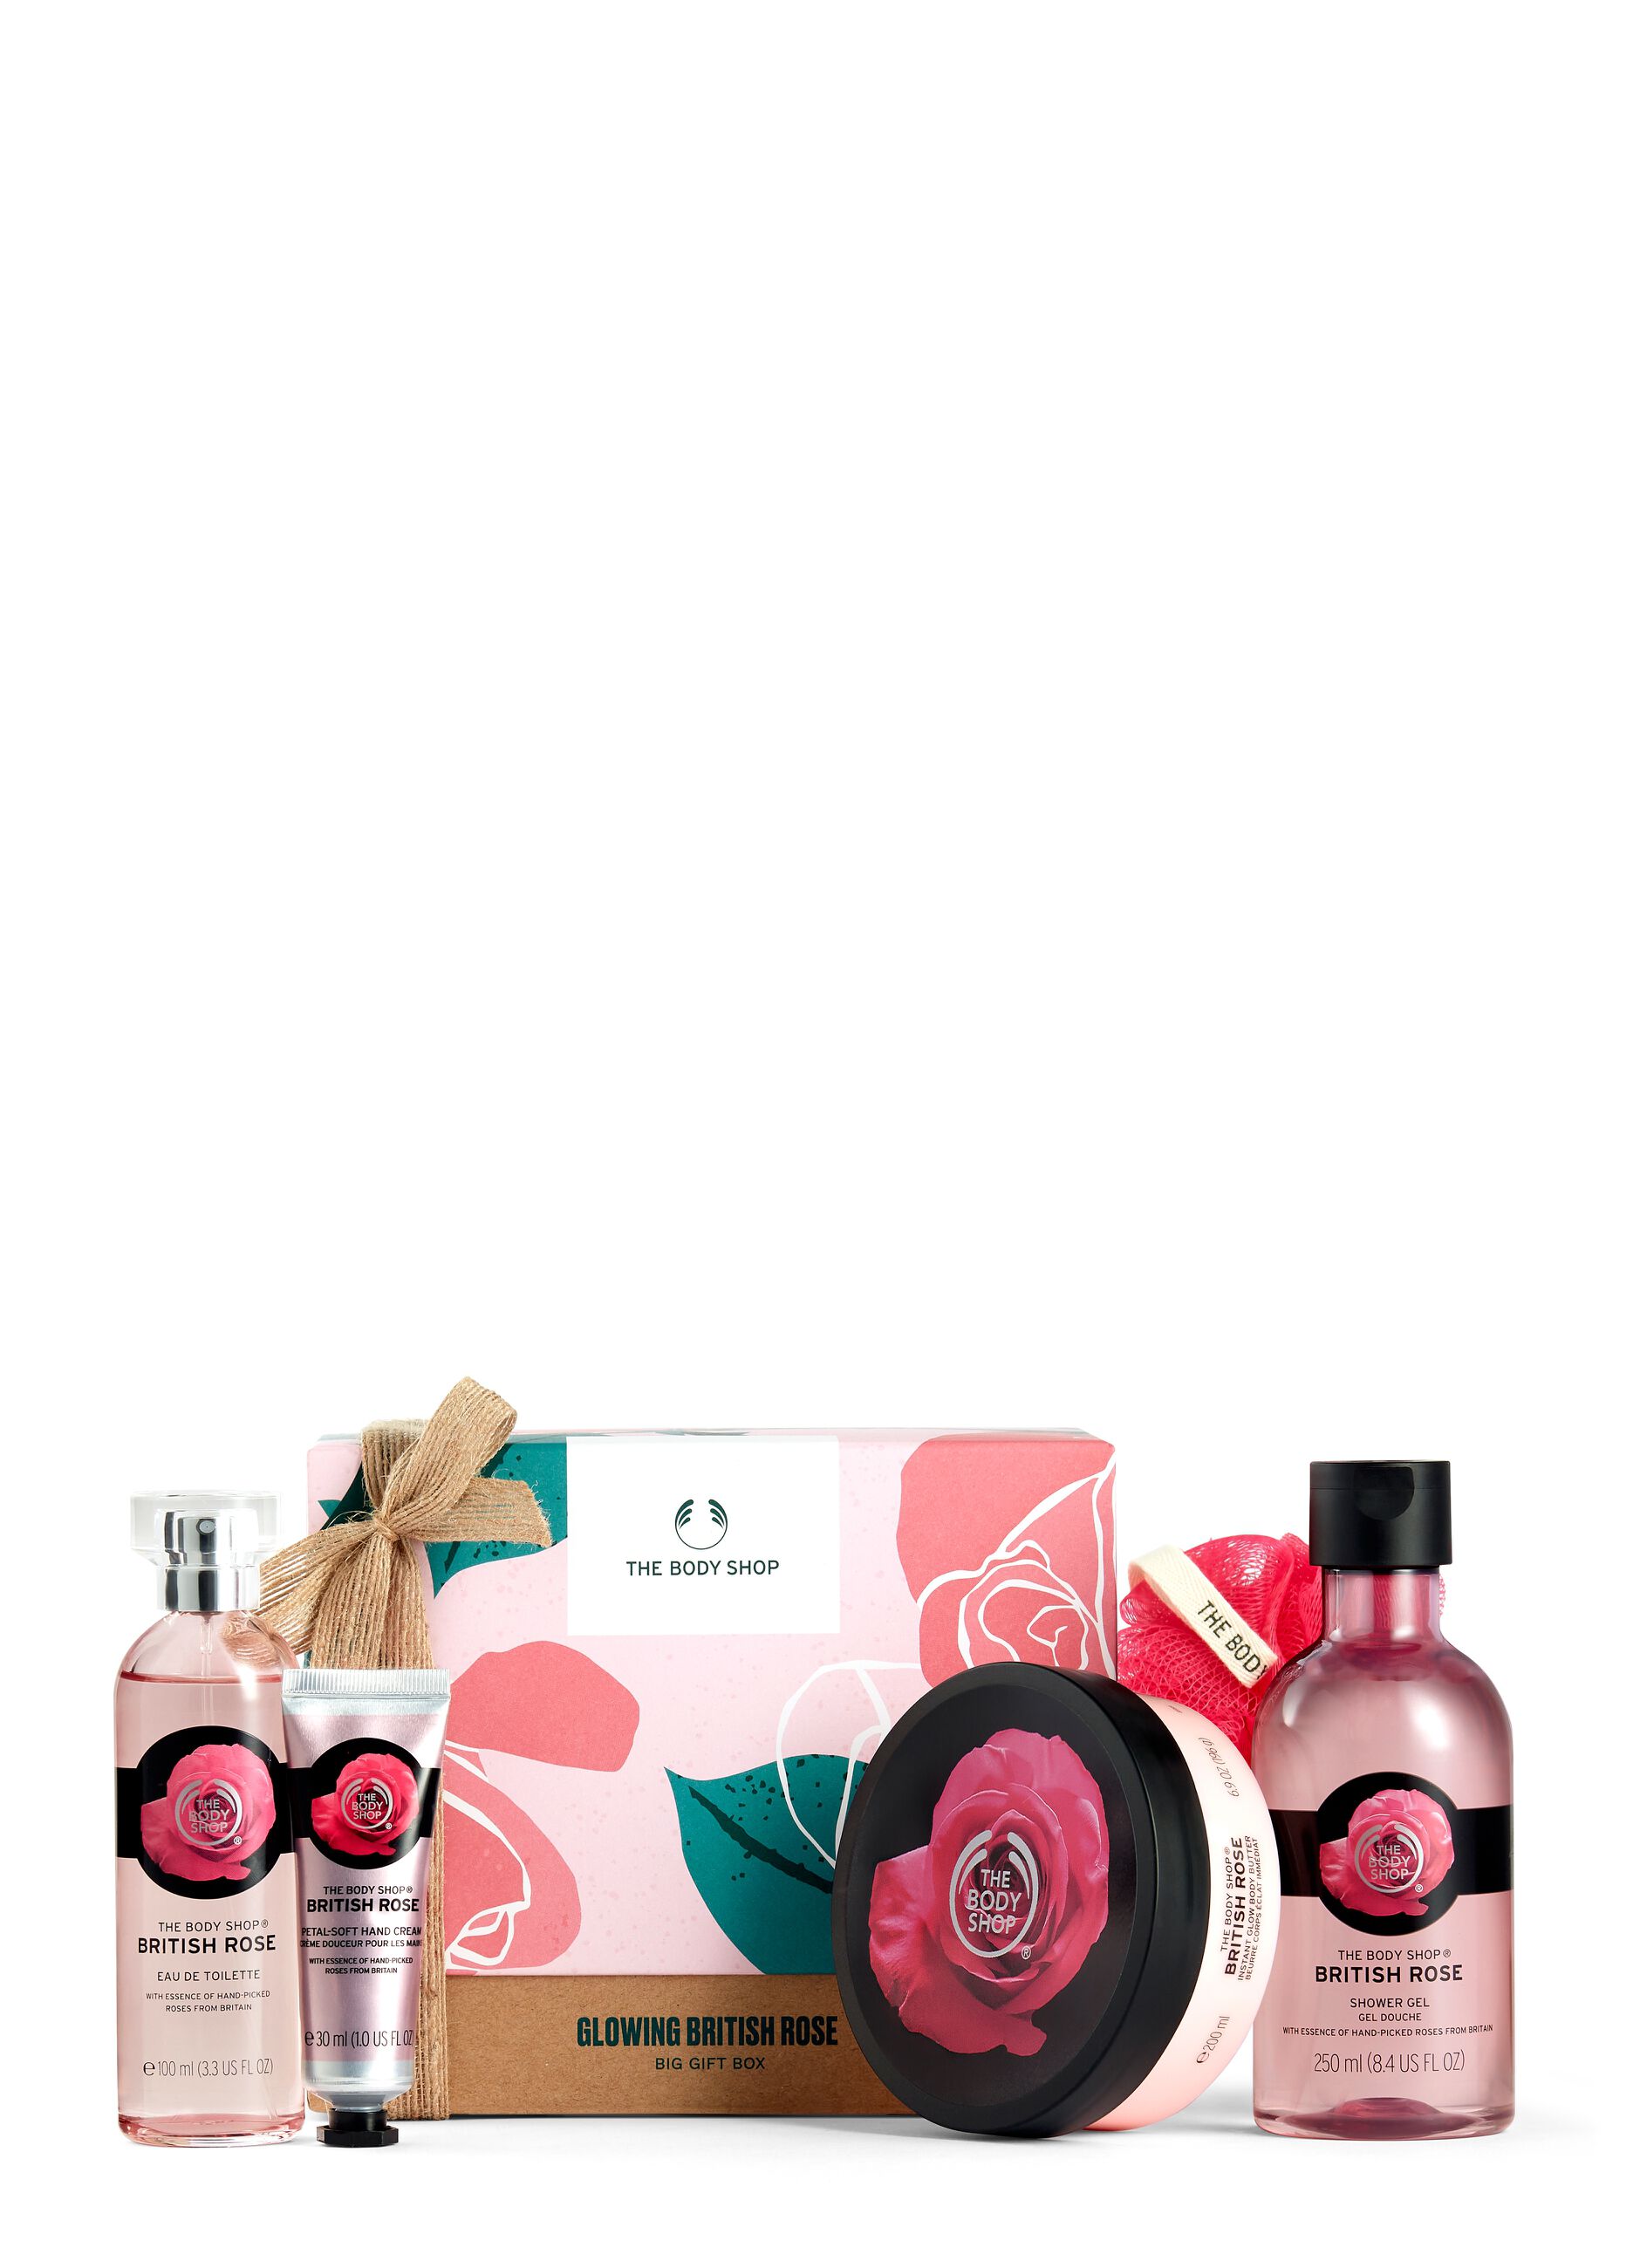 The Body Shop British Rose large gift box